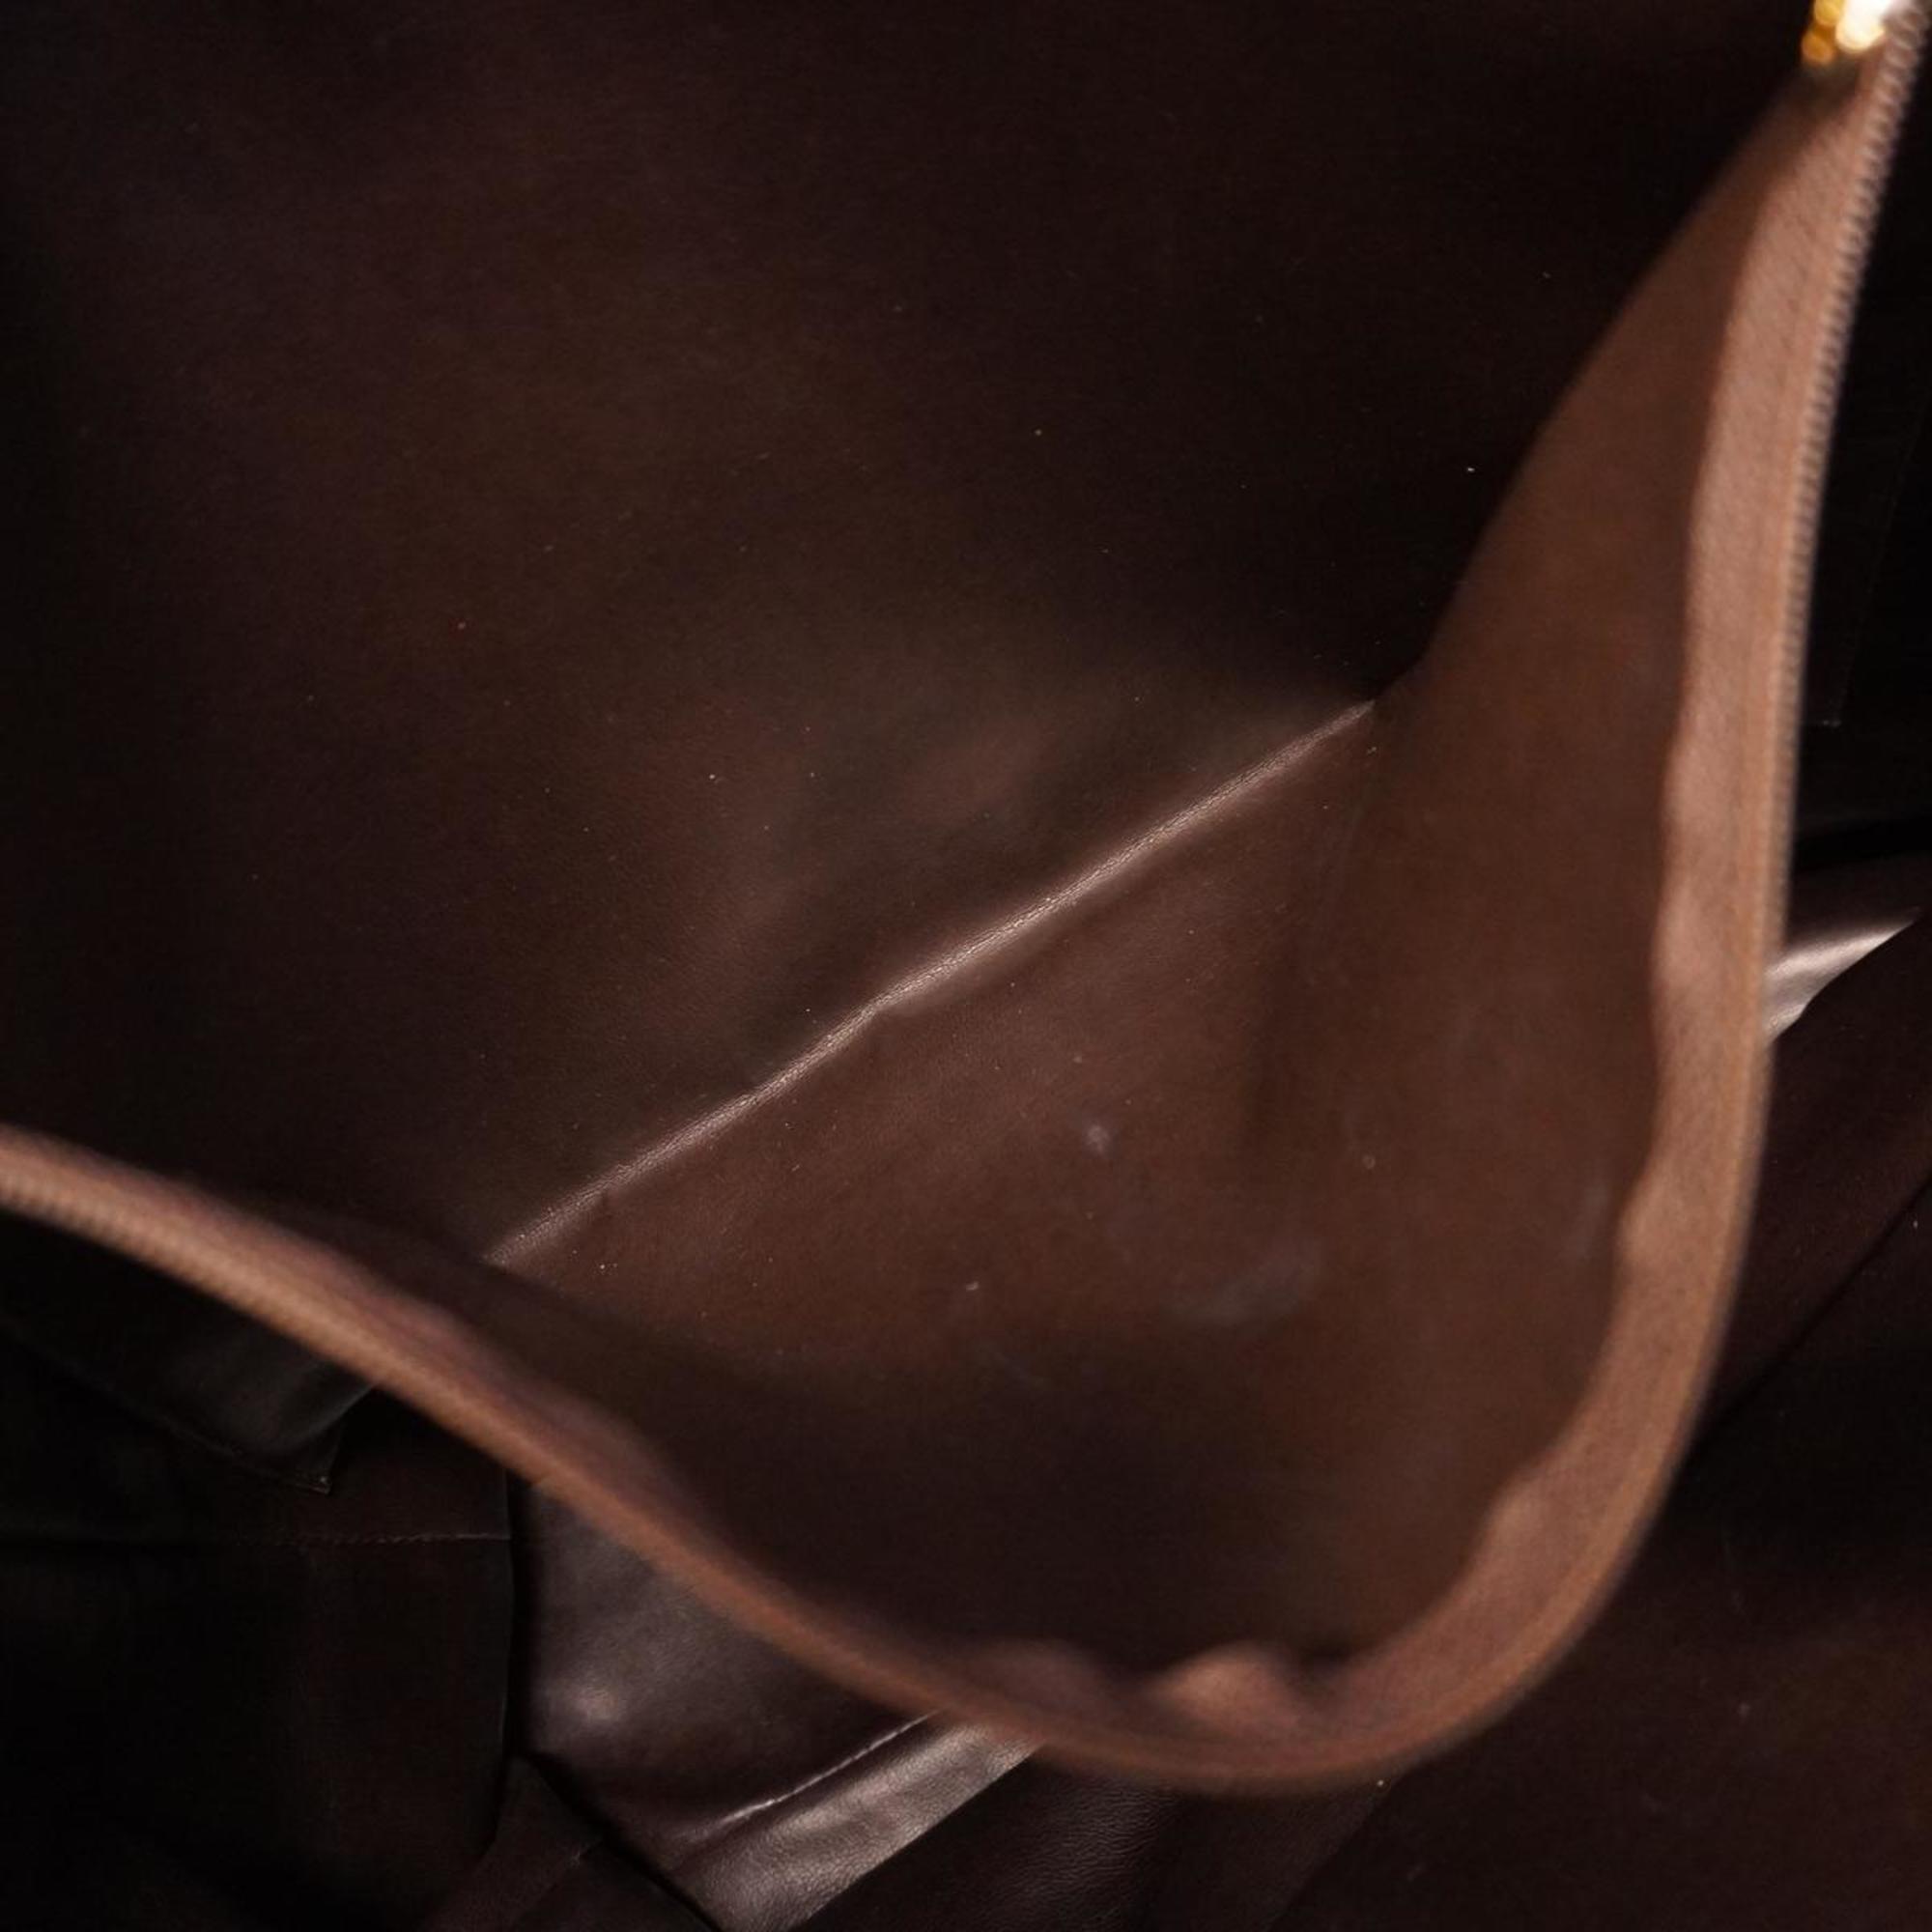 Chanel Shoulder Bag Matelasse Chain Lambskin Brown Women's